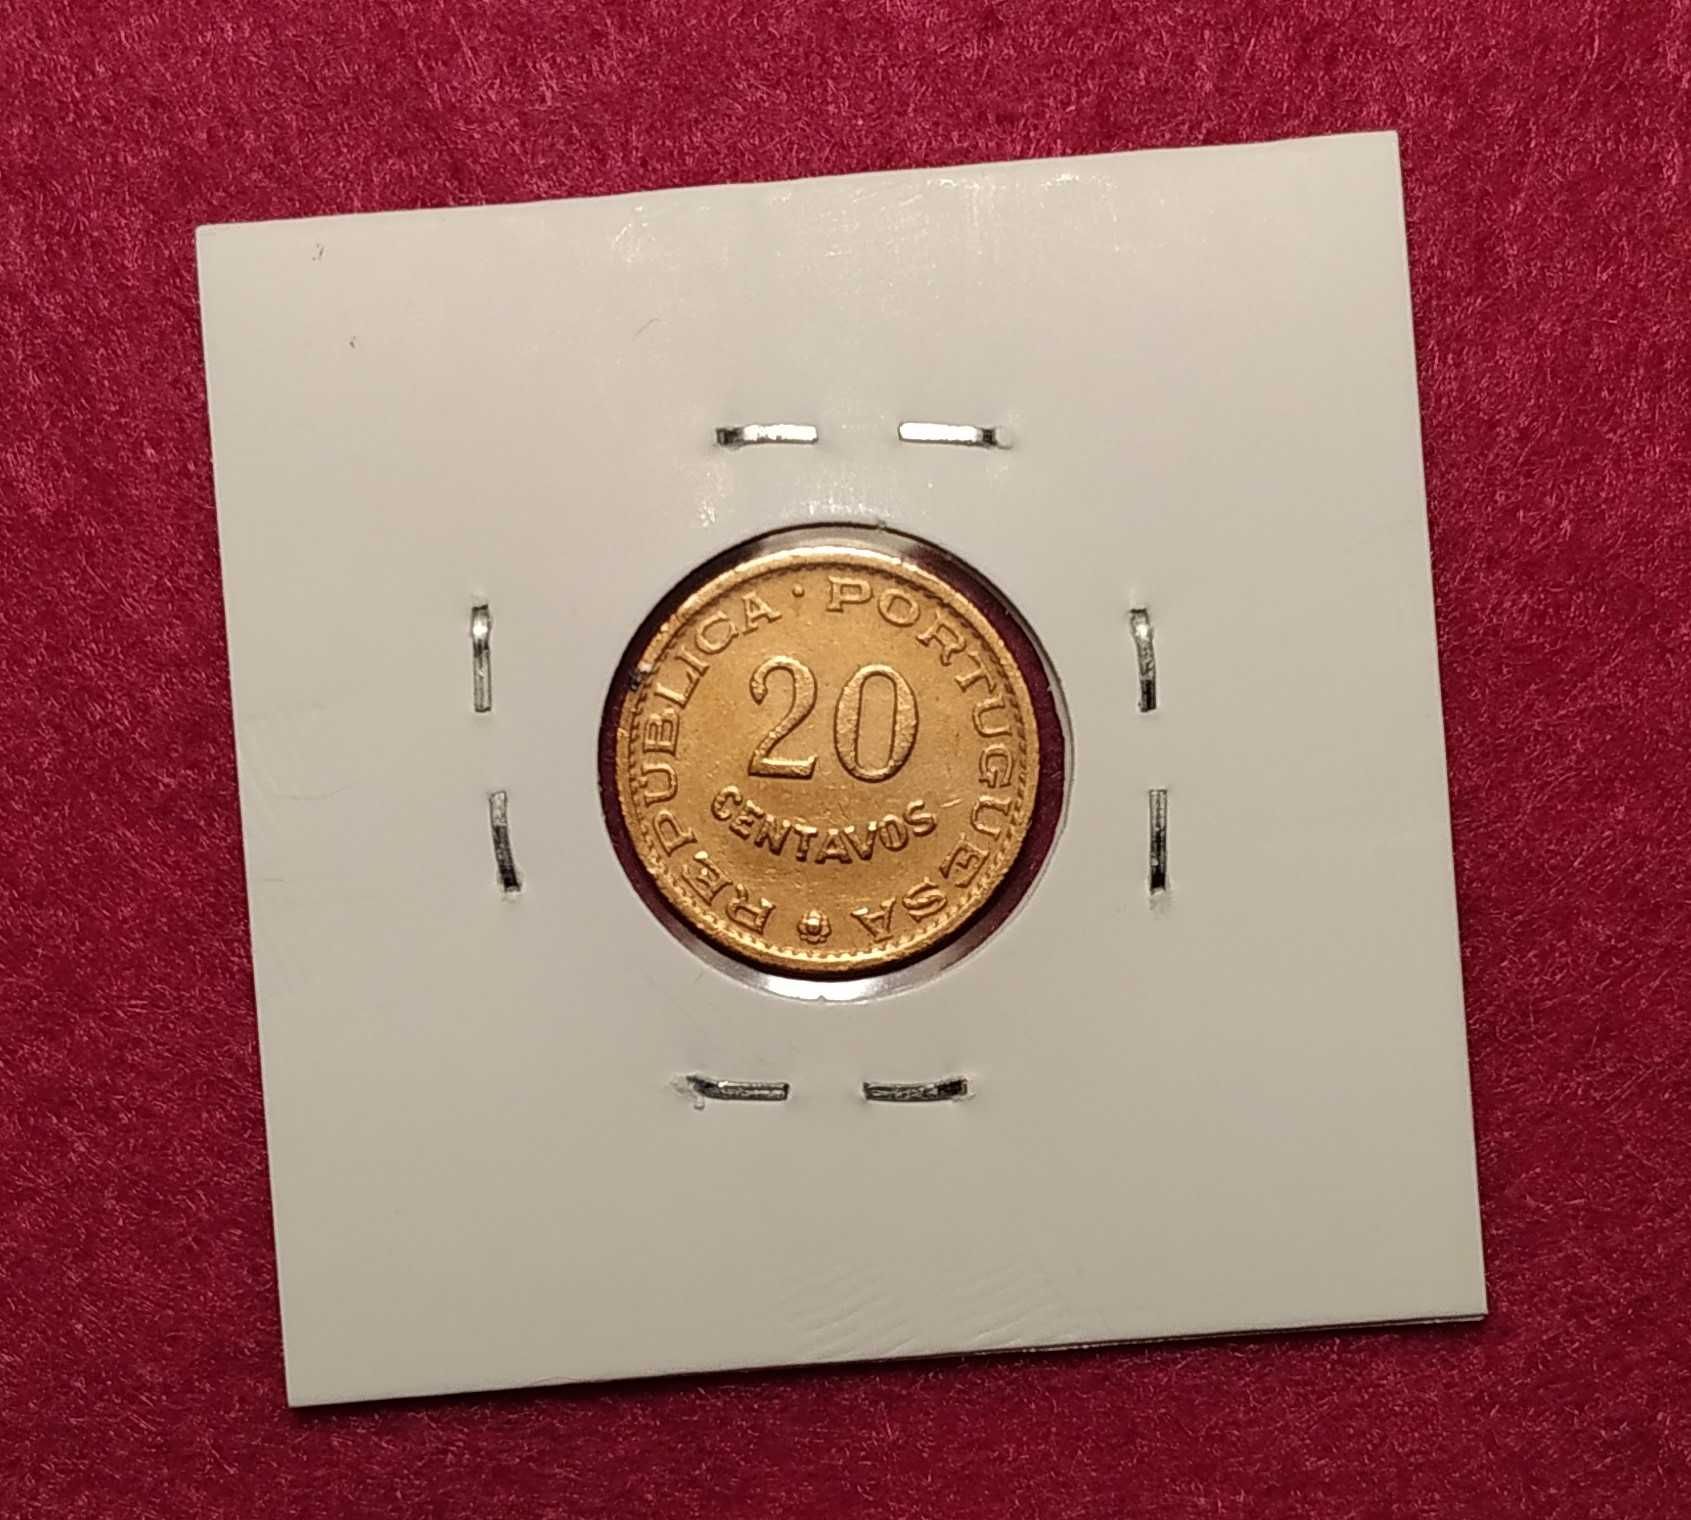 Moçambique - moeda de 20 centavos de 1961